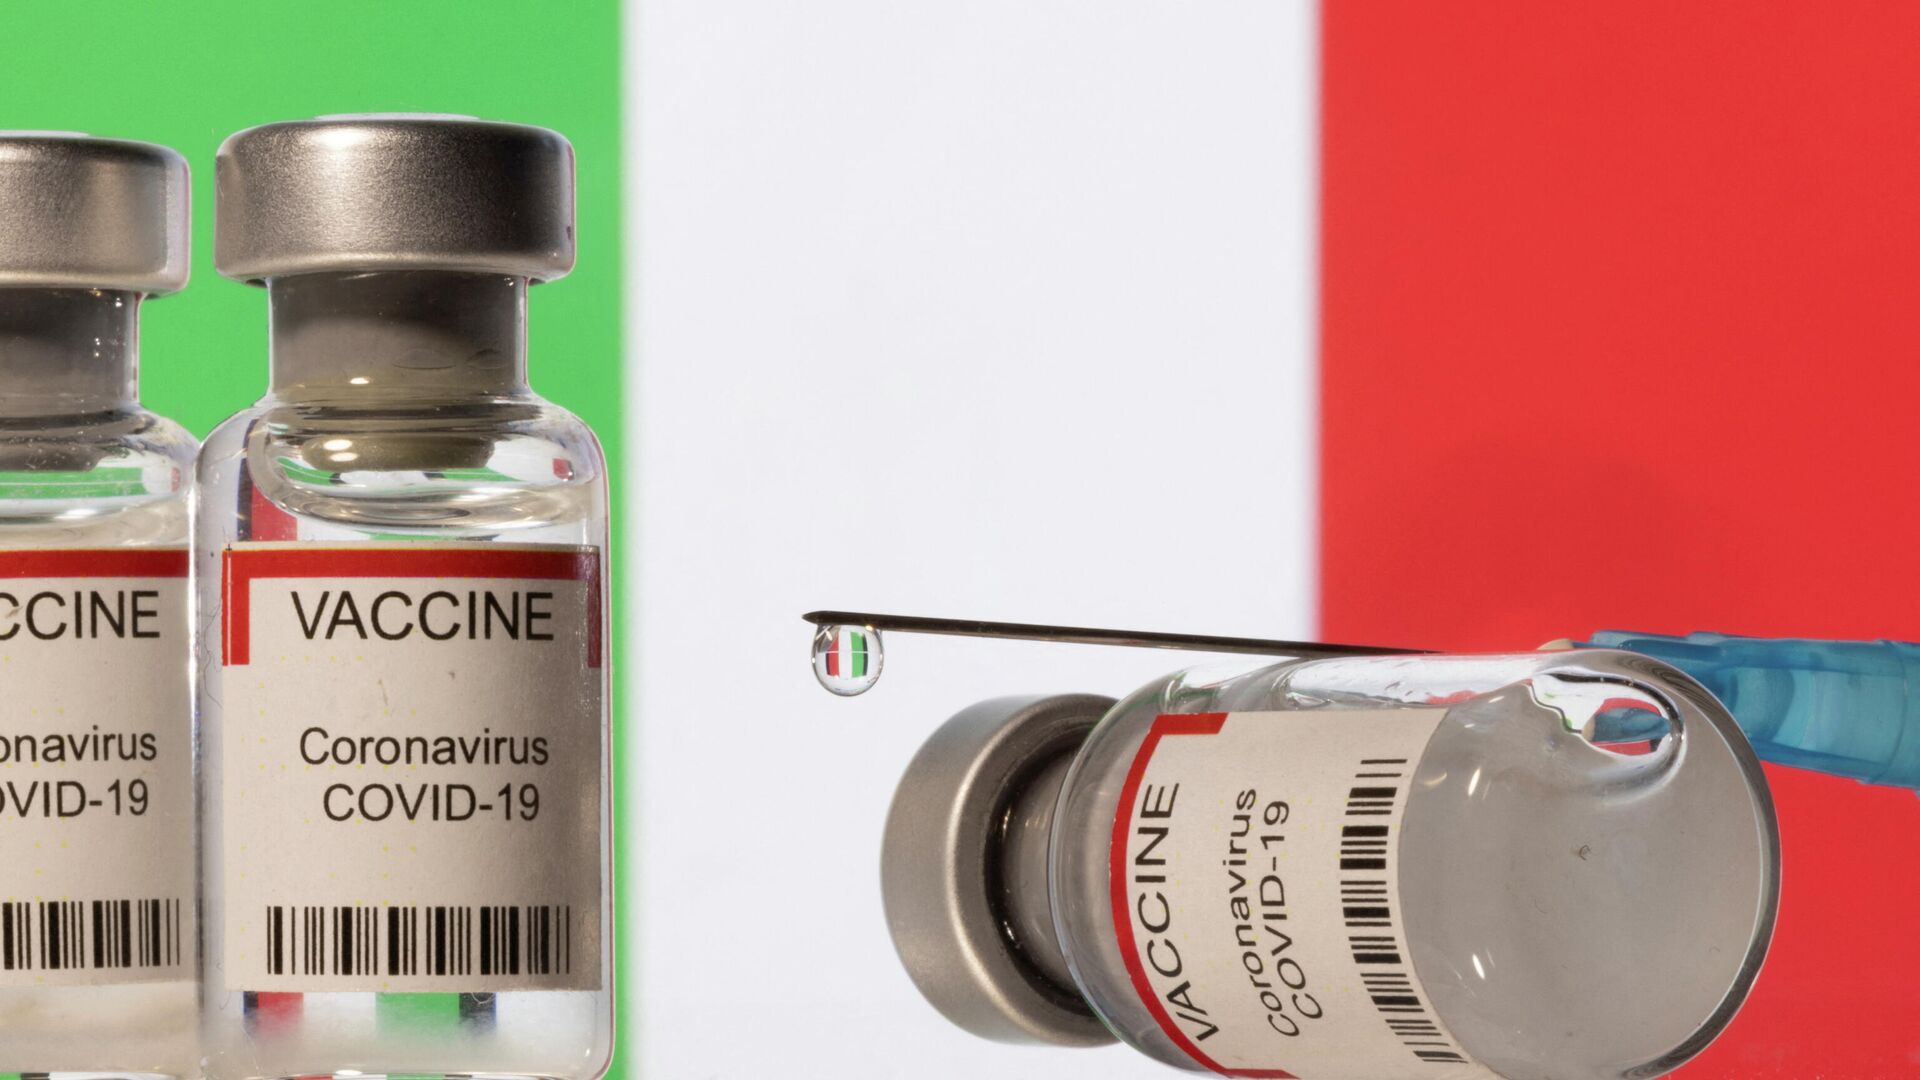 Vacunas con la bandera italiana - Sputnik Mundo, 1920, 24.12.2021